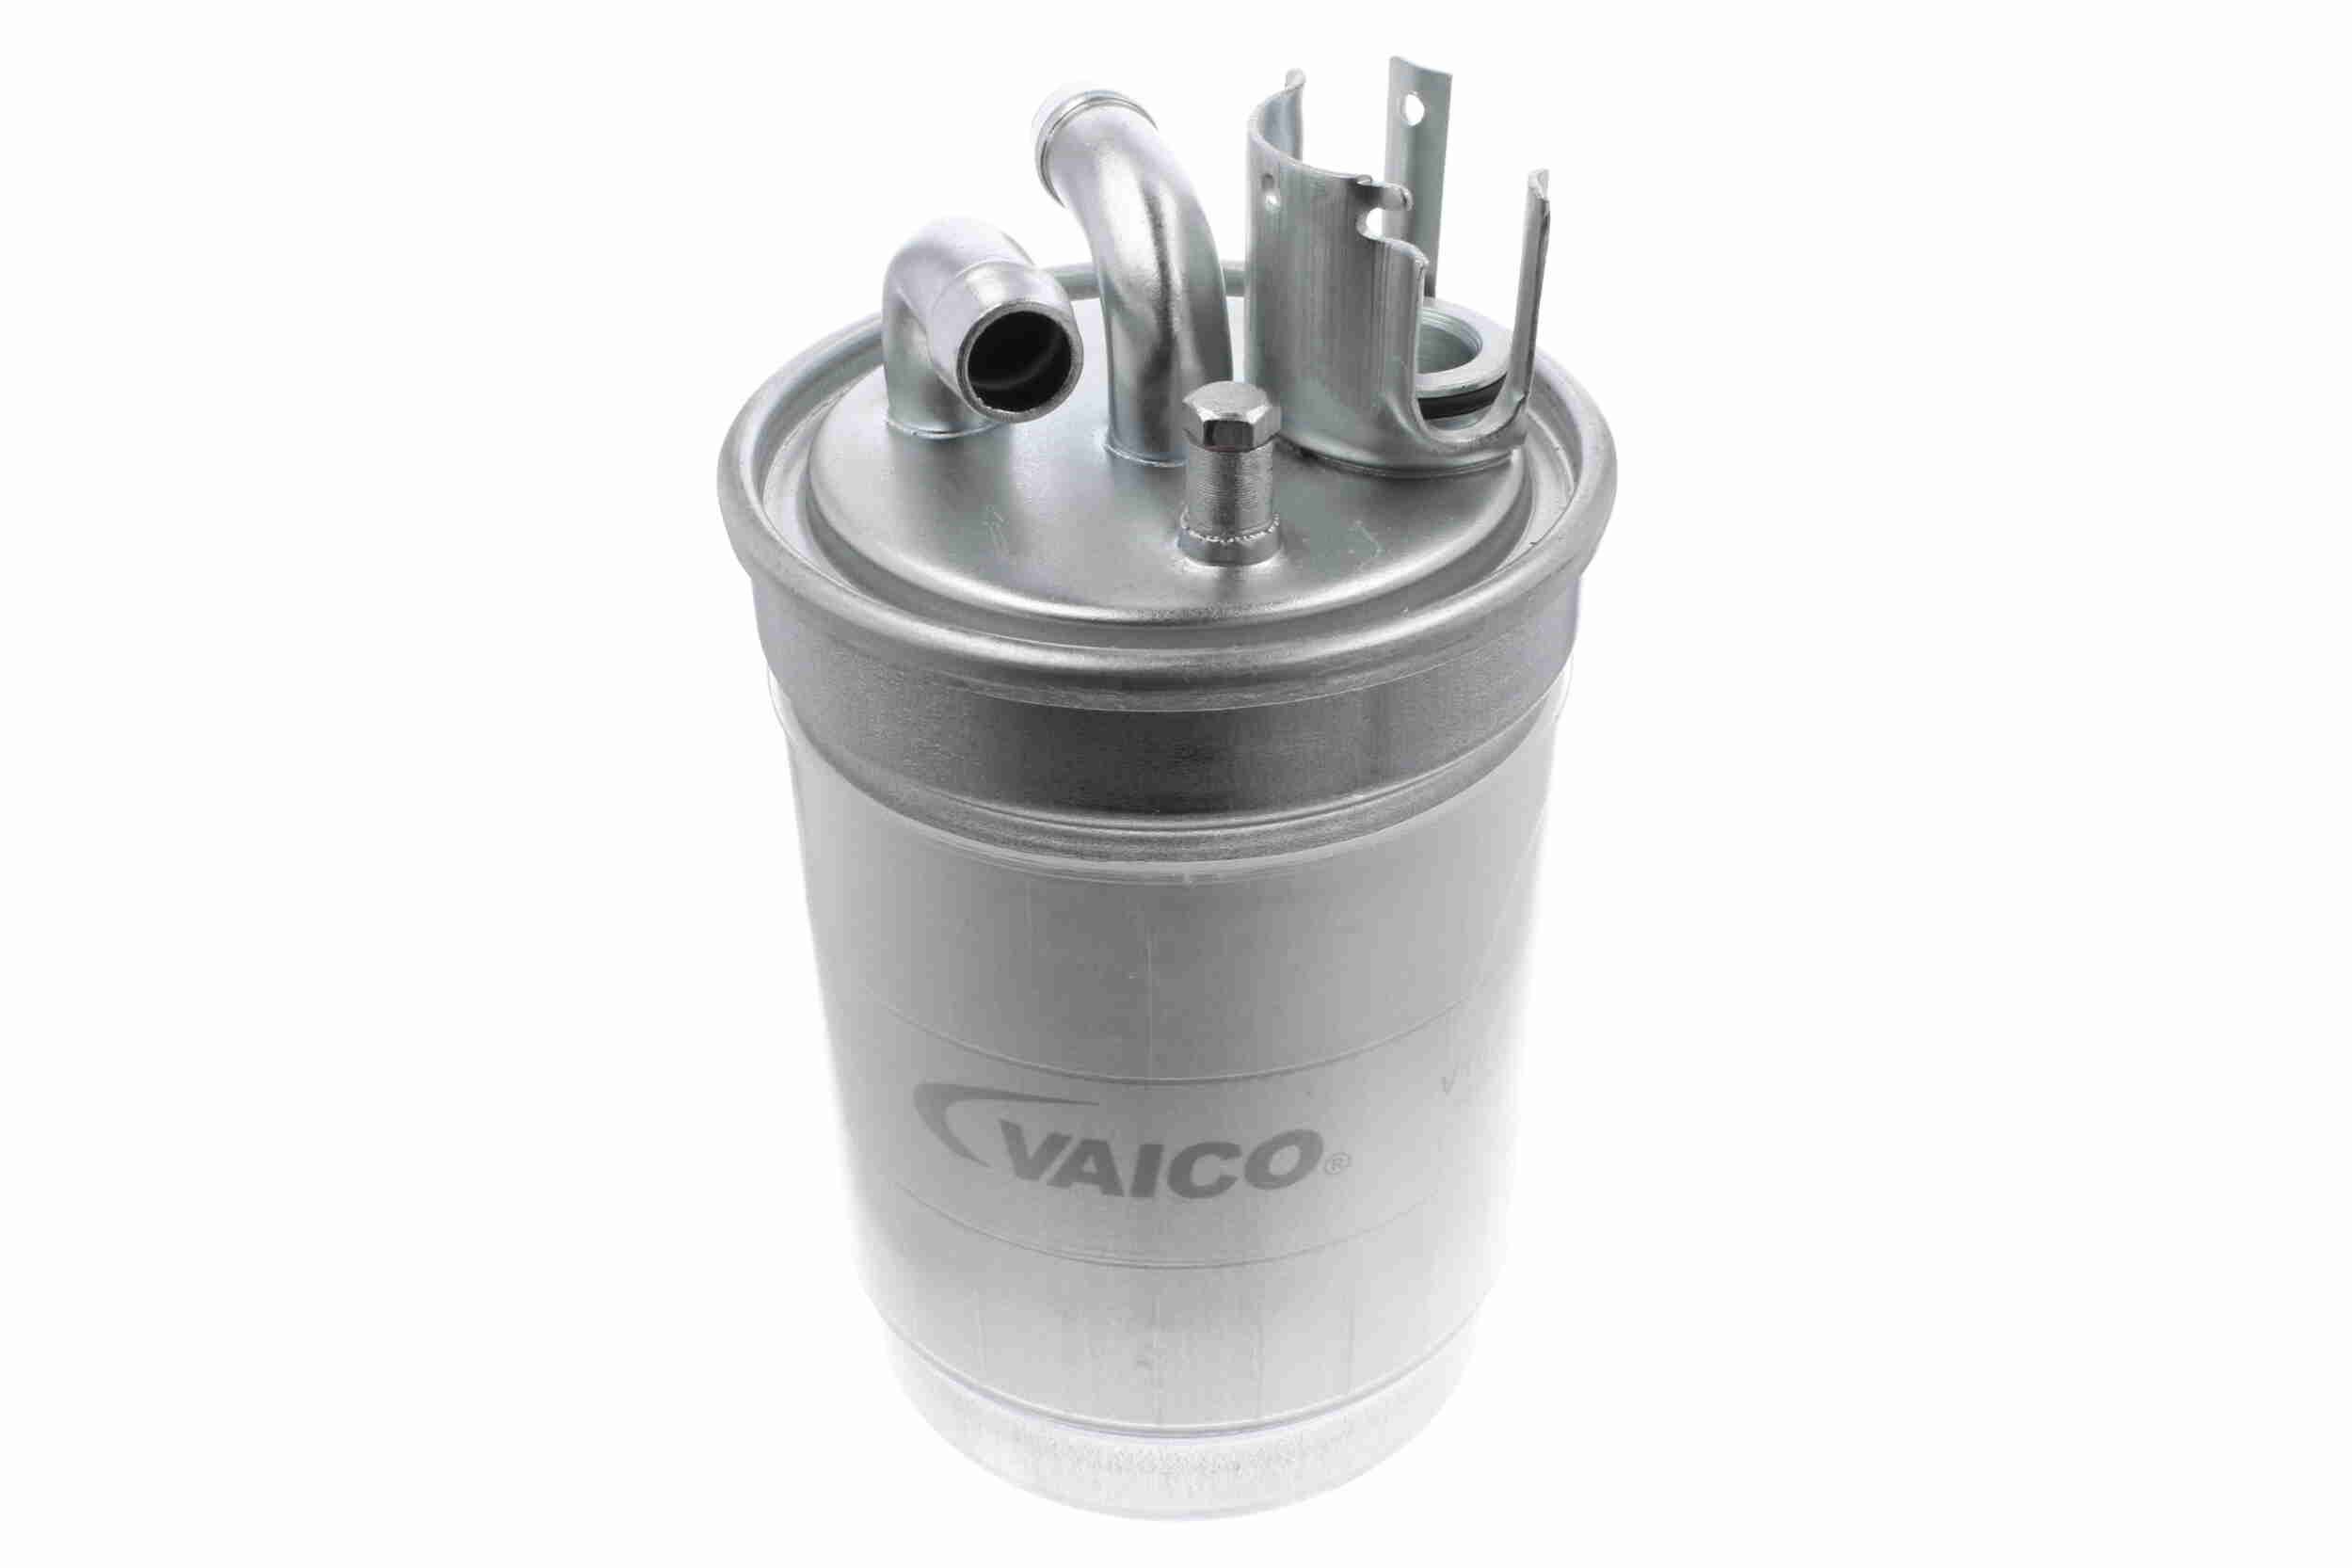 VAICO Palivový filtr Daihatsu V10-0359 v originální kvalitě